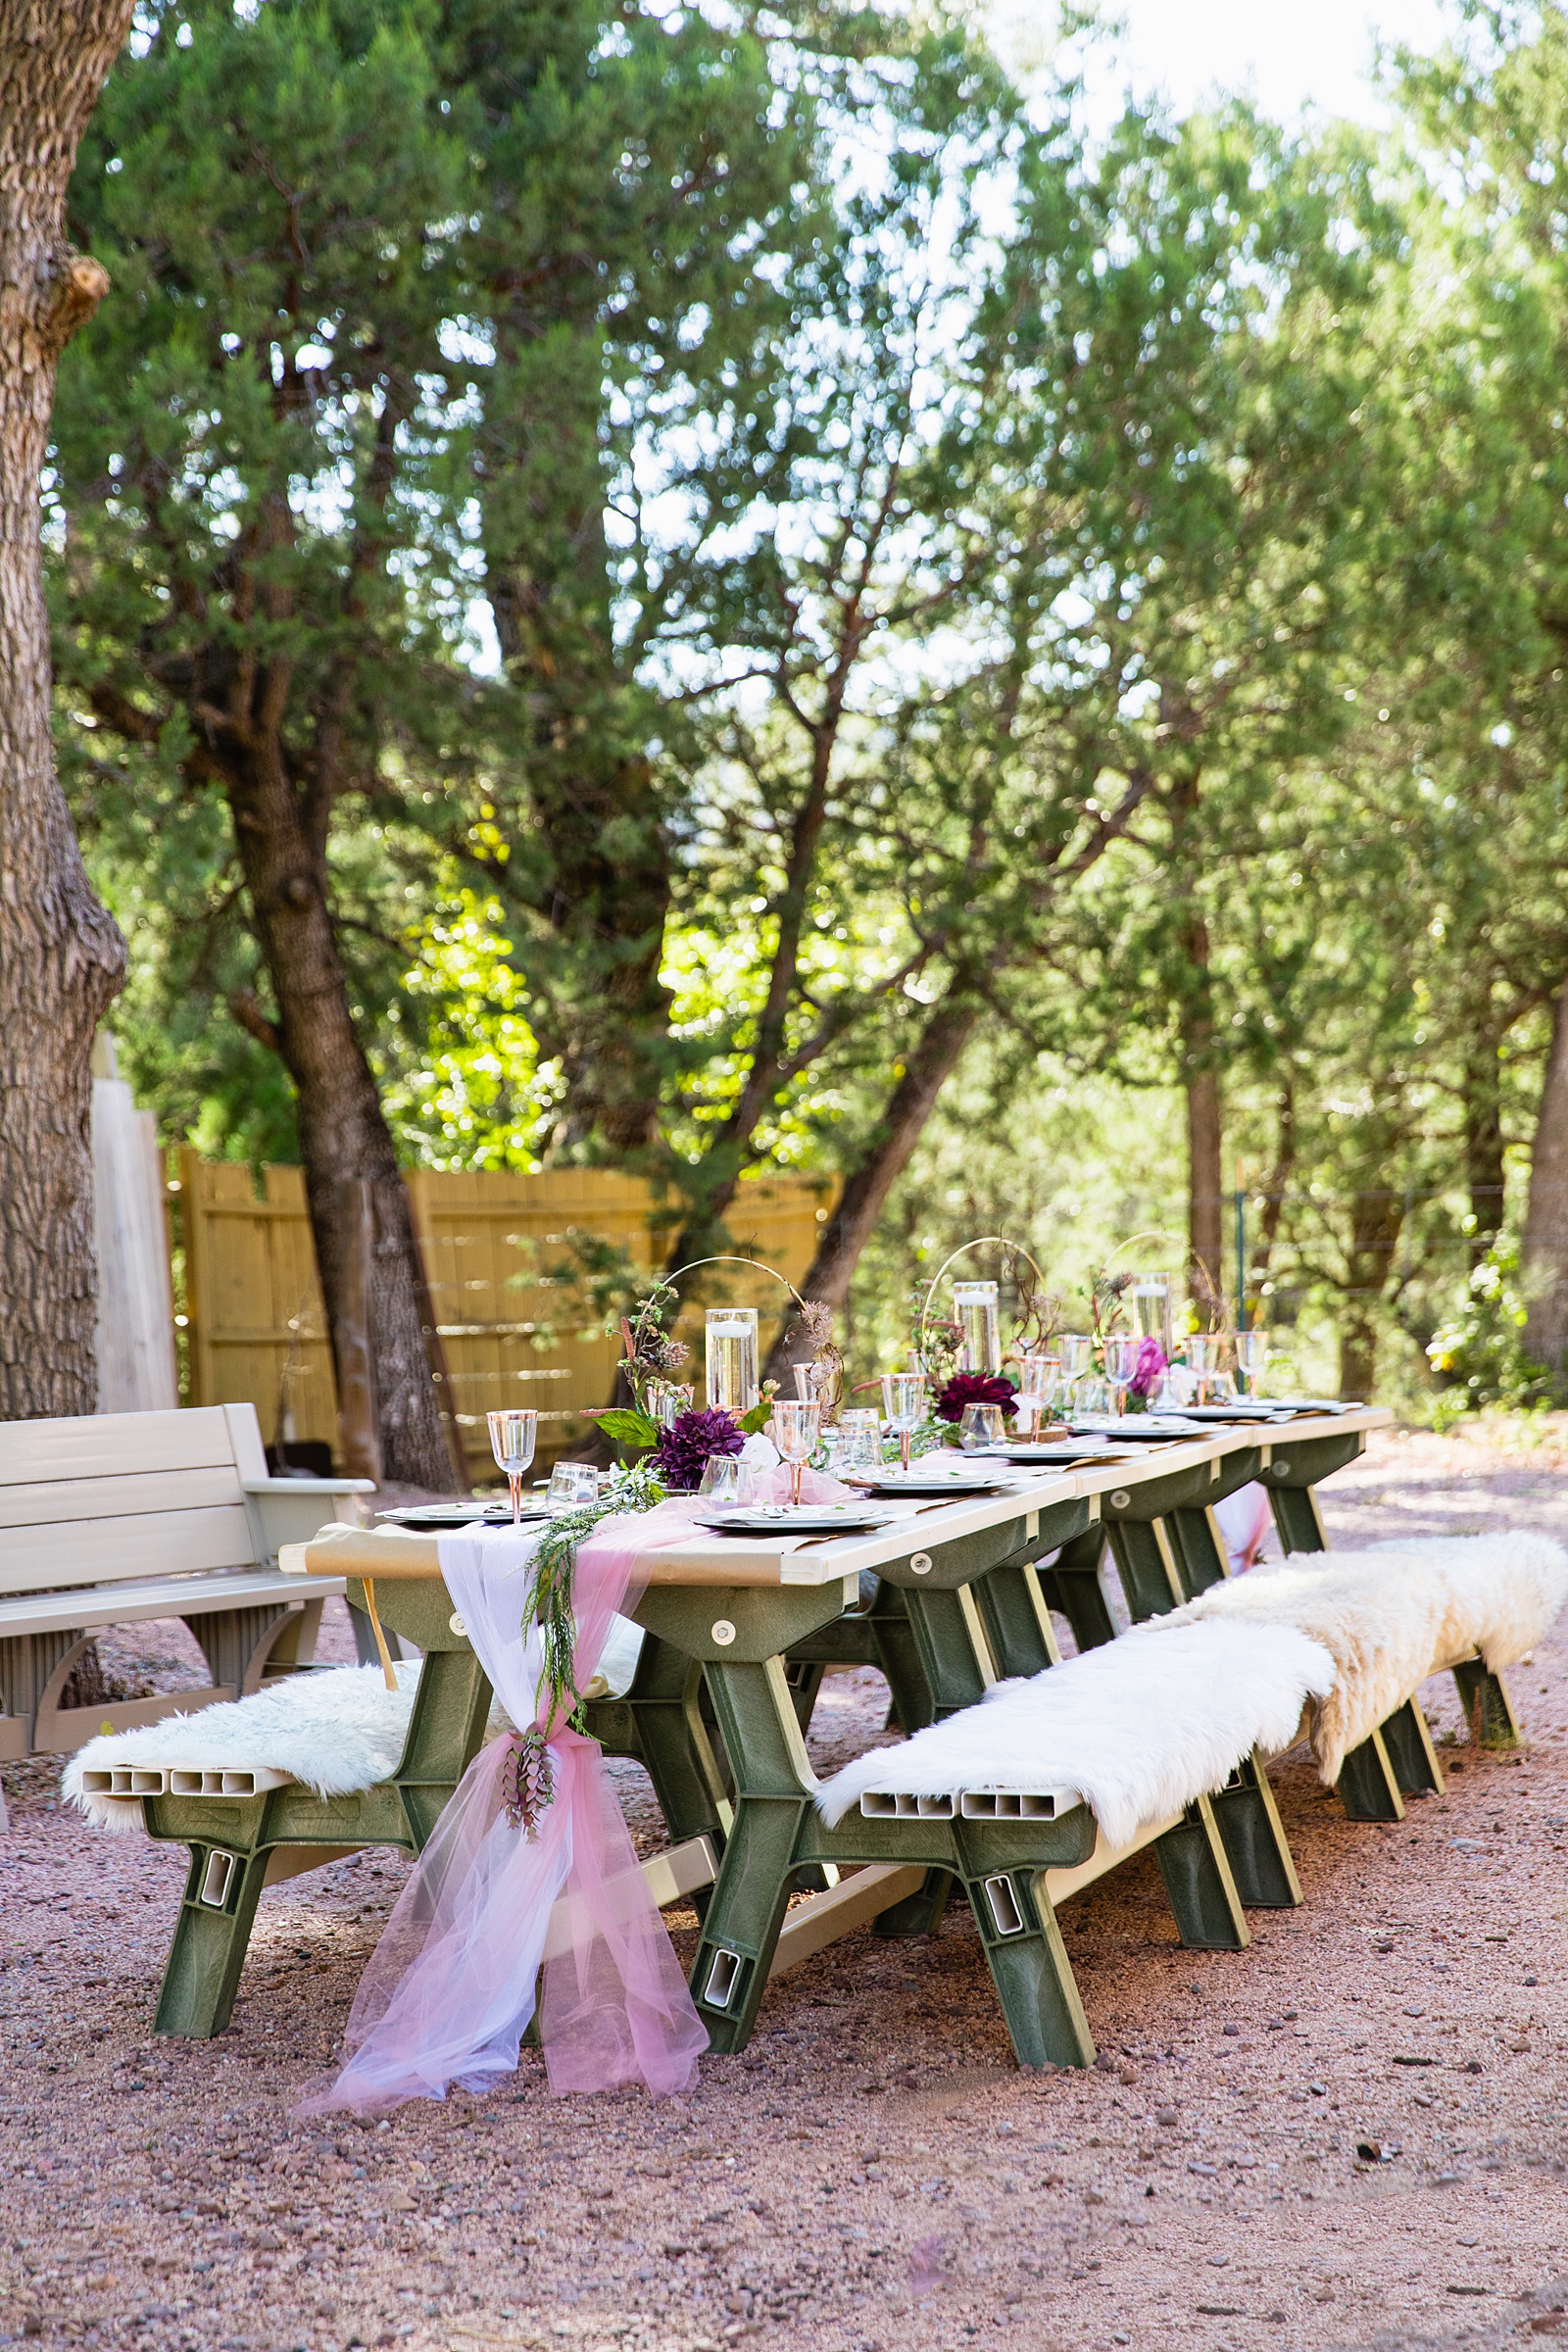 Boho table setting at Mogollon Rim wedding reception by Northern Arizona wedding photographer PMA Photography.